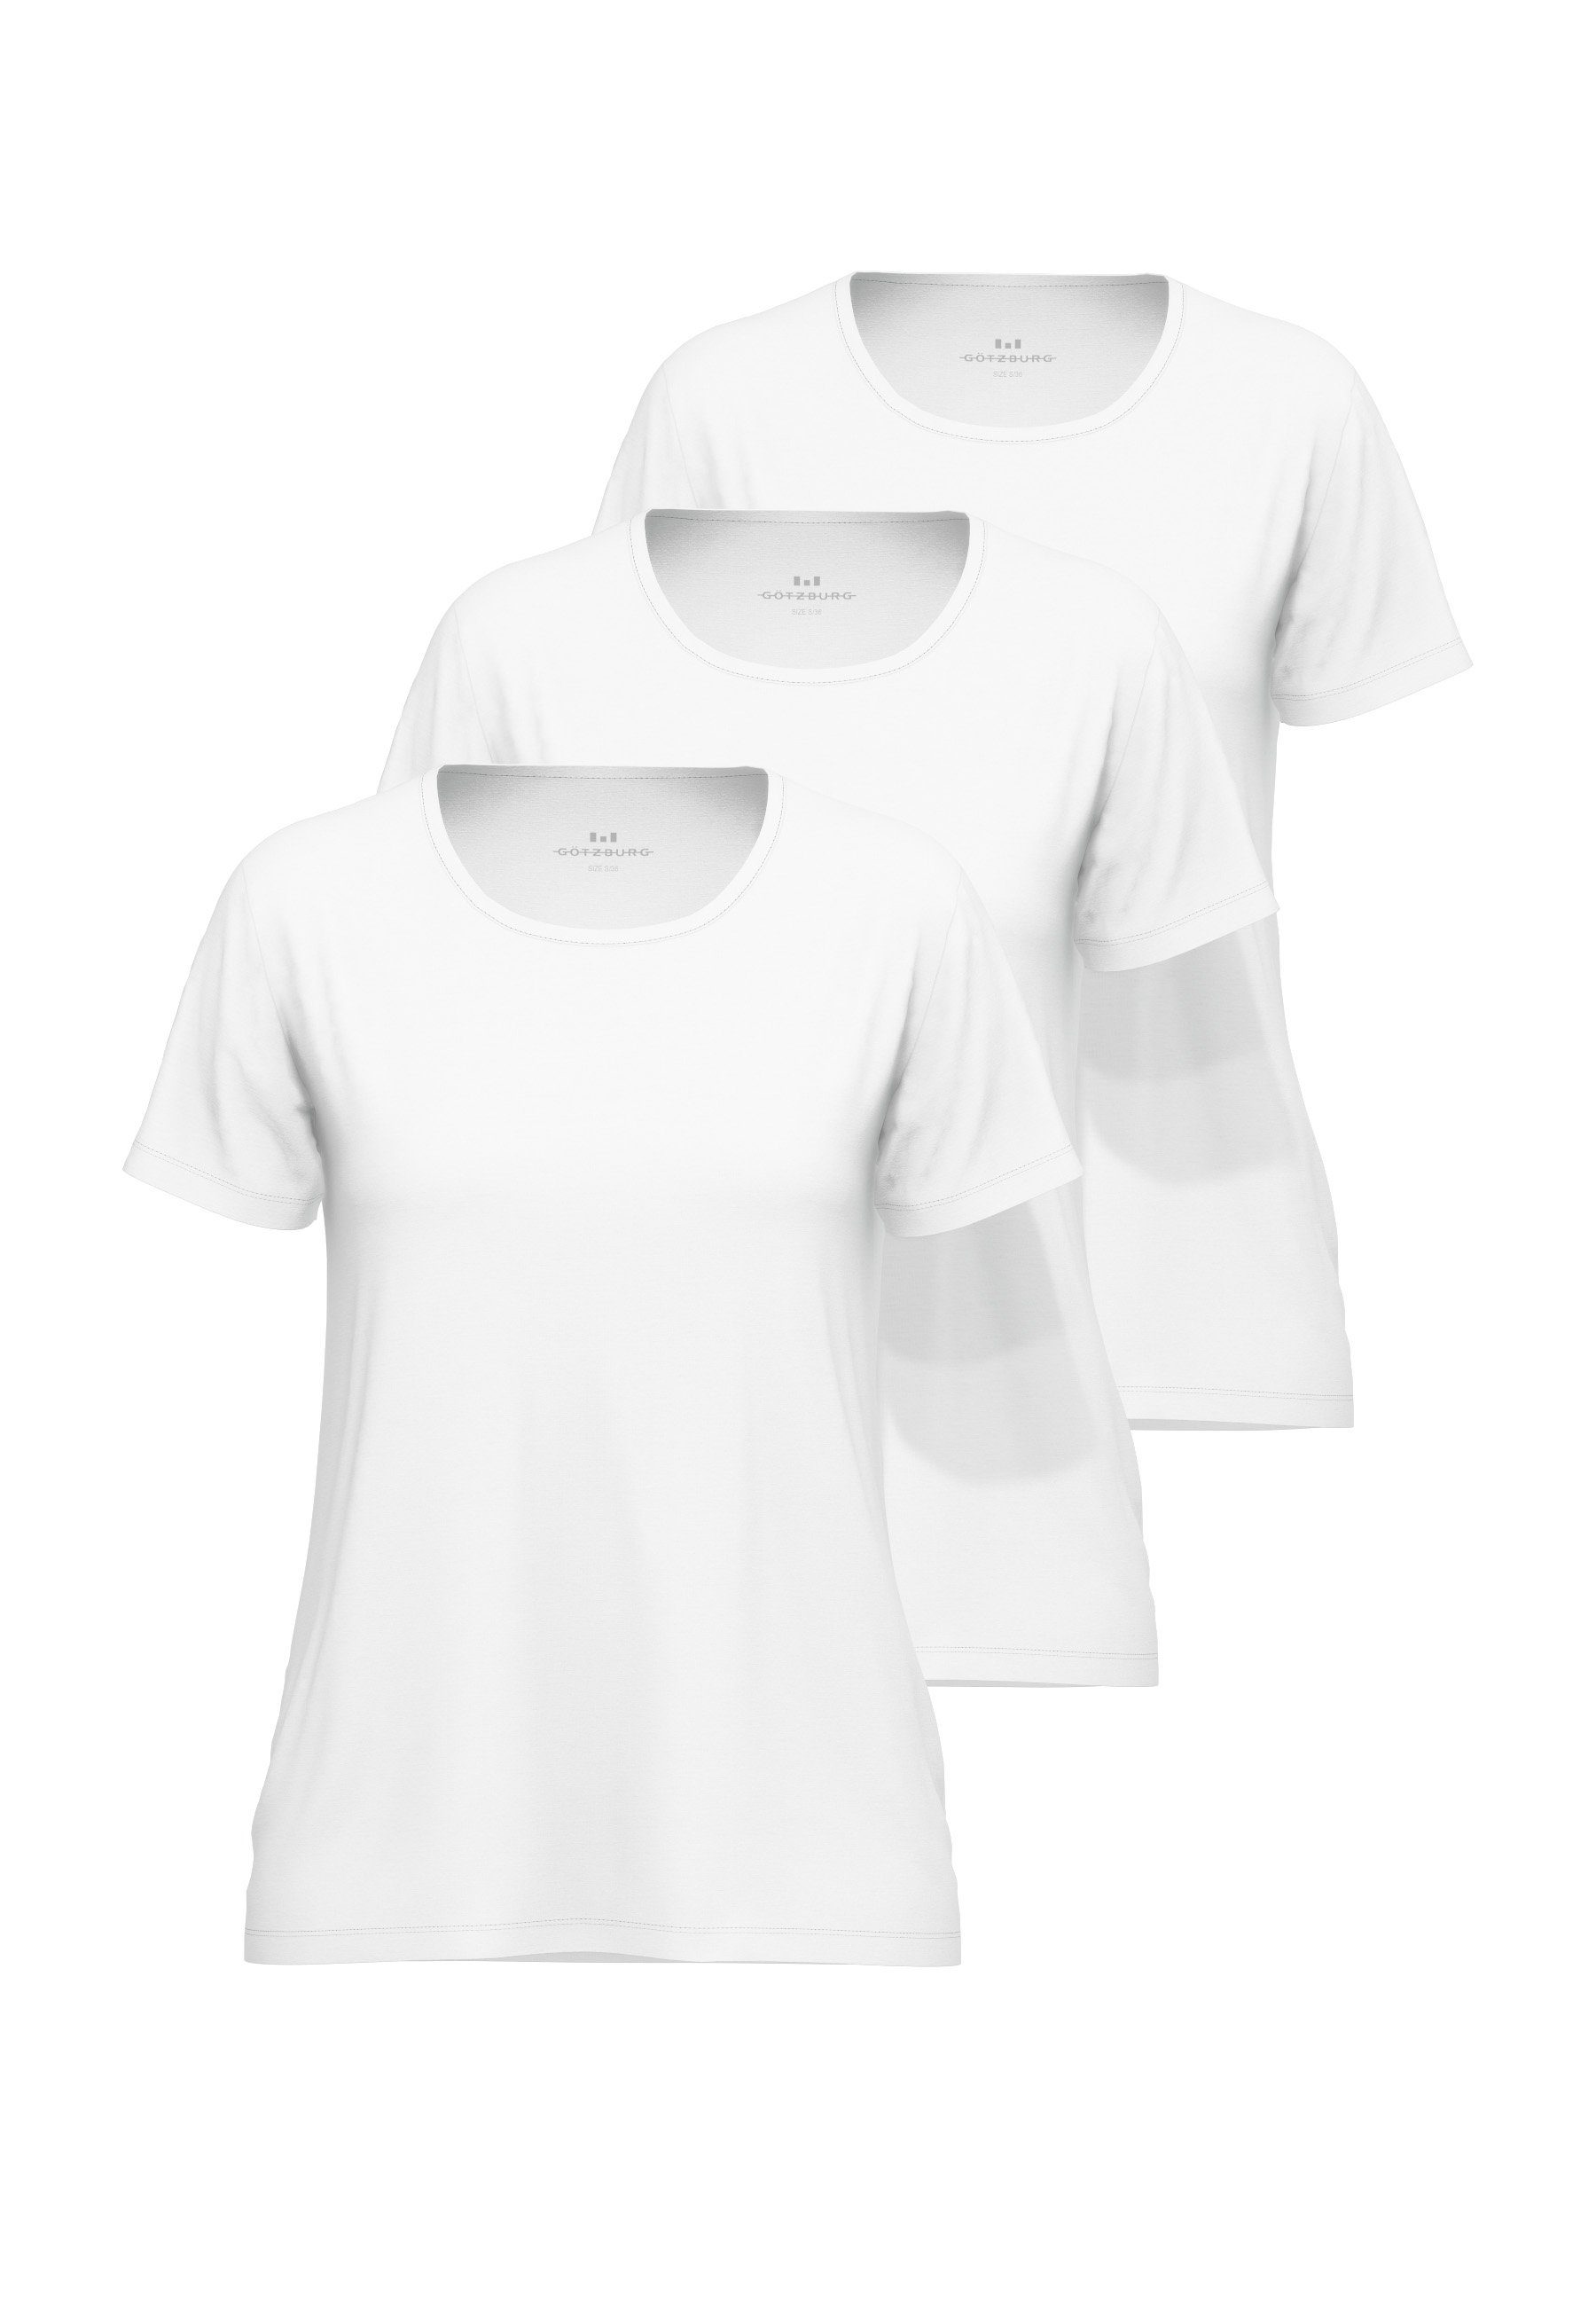 GÖTZBURG Unterziehshirt GÖTZBURG Damen Shirt weiß uni 3er Pack (3-St)